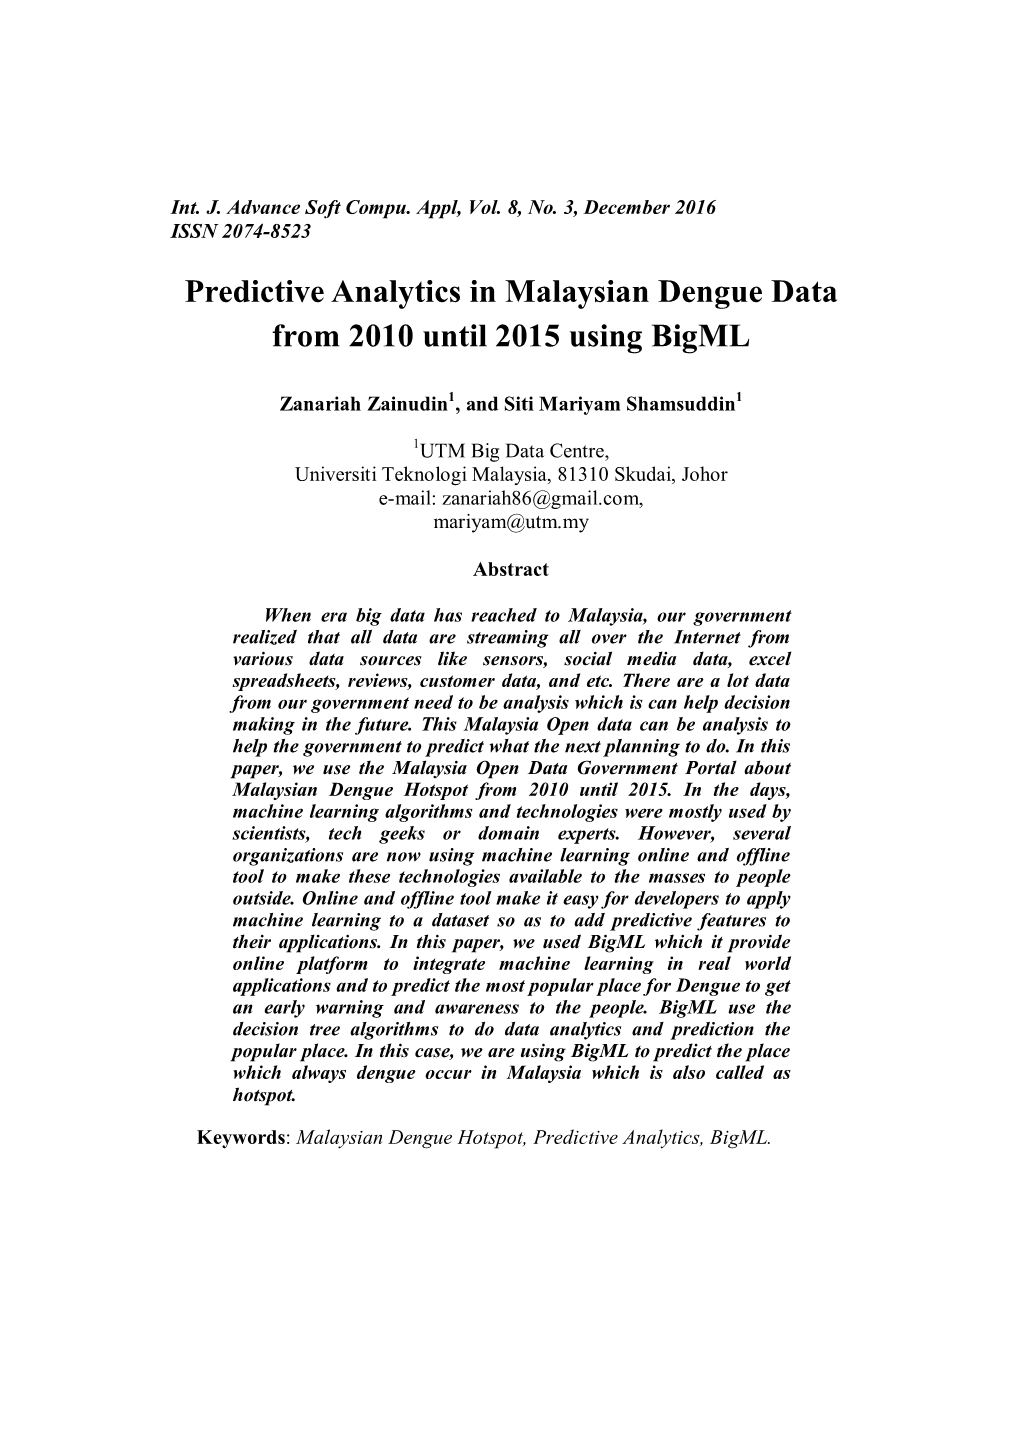 Predictive Analytics in Malaysian Dengue Data from 2010 Until 2015 Using Bigml